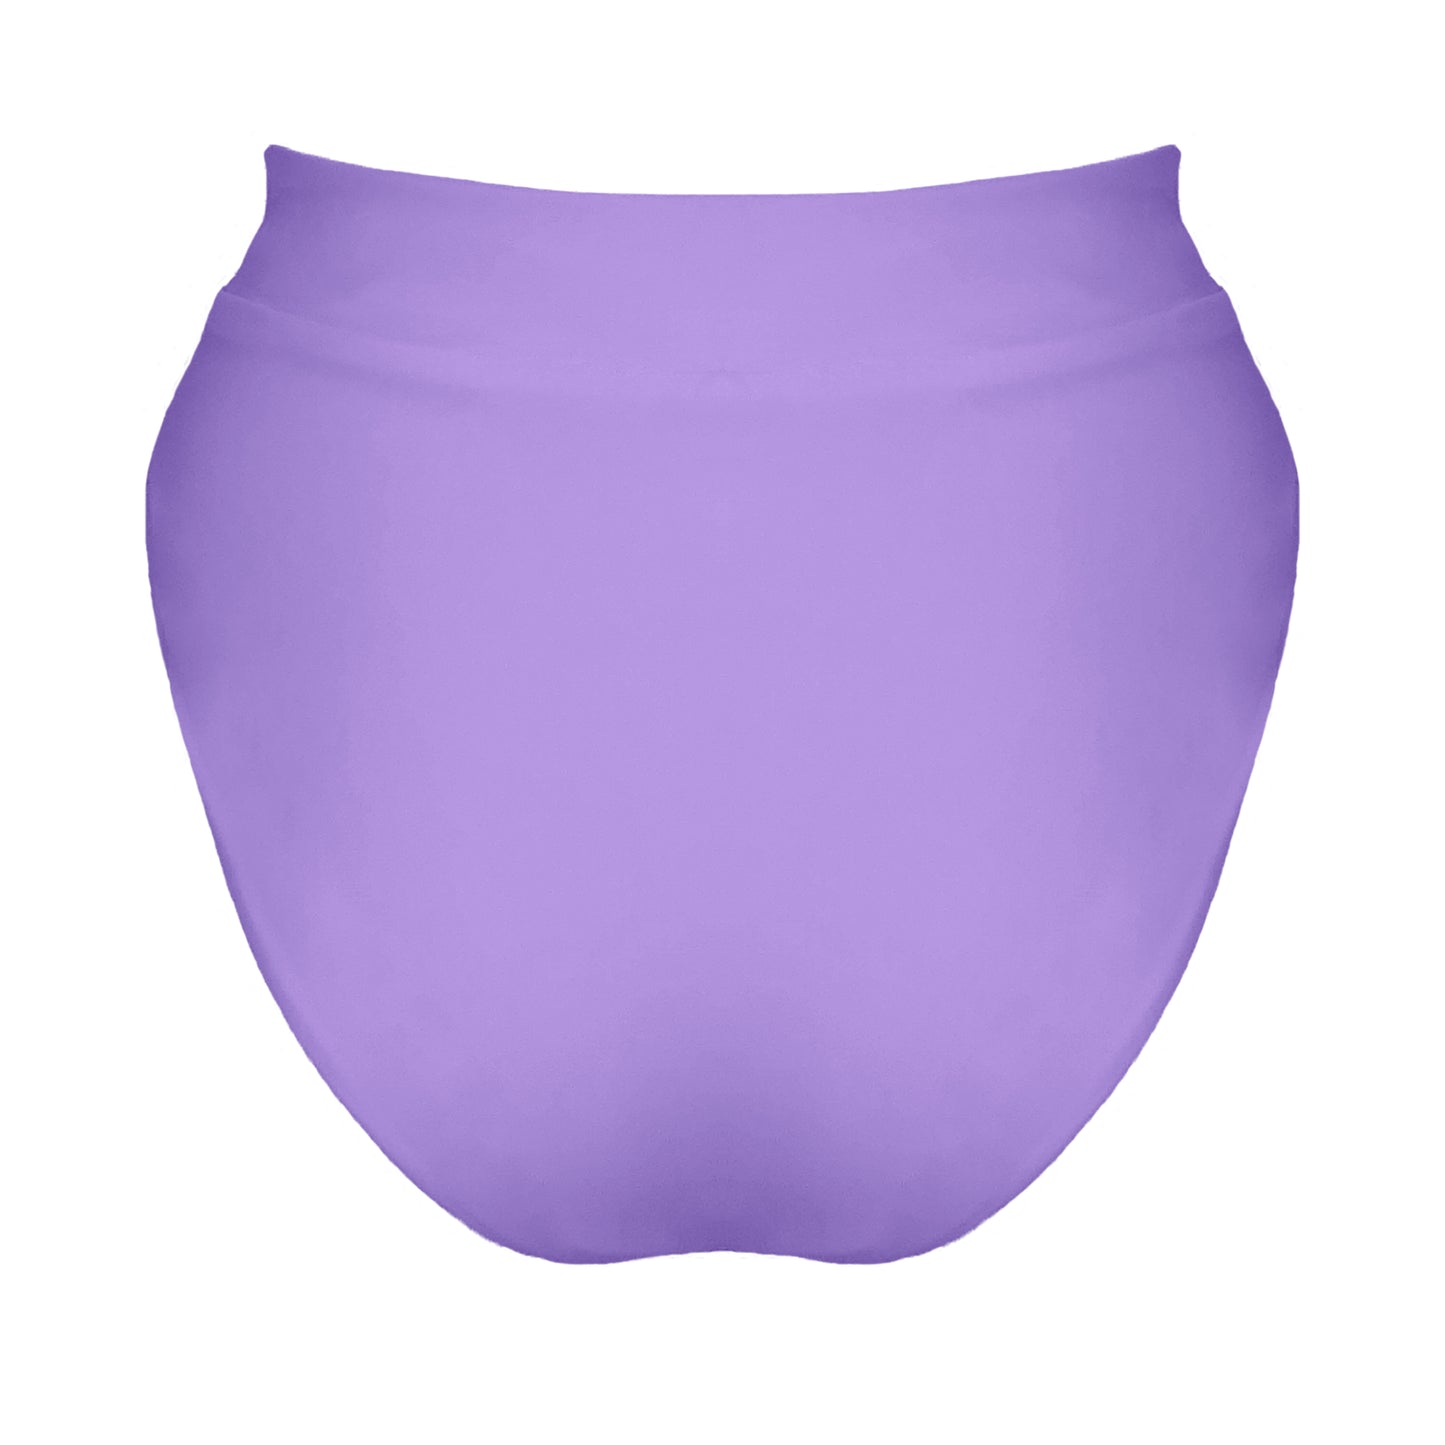 Back view of lavender purple banded high waist full coverage bikini bottom.